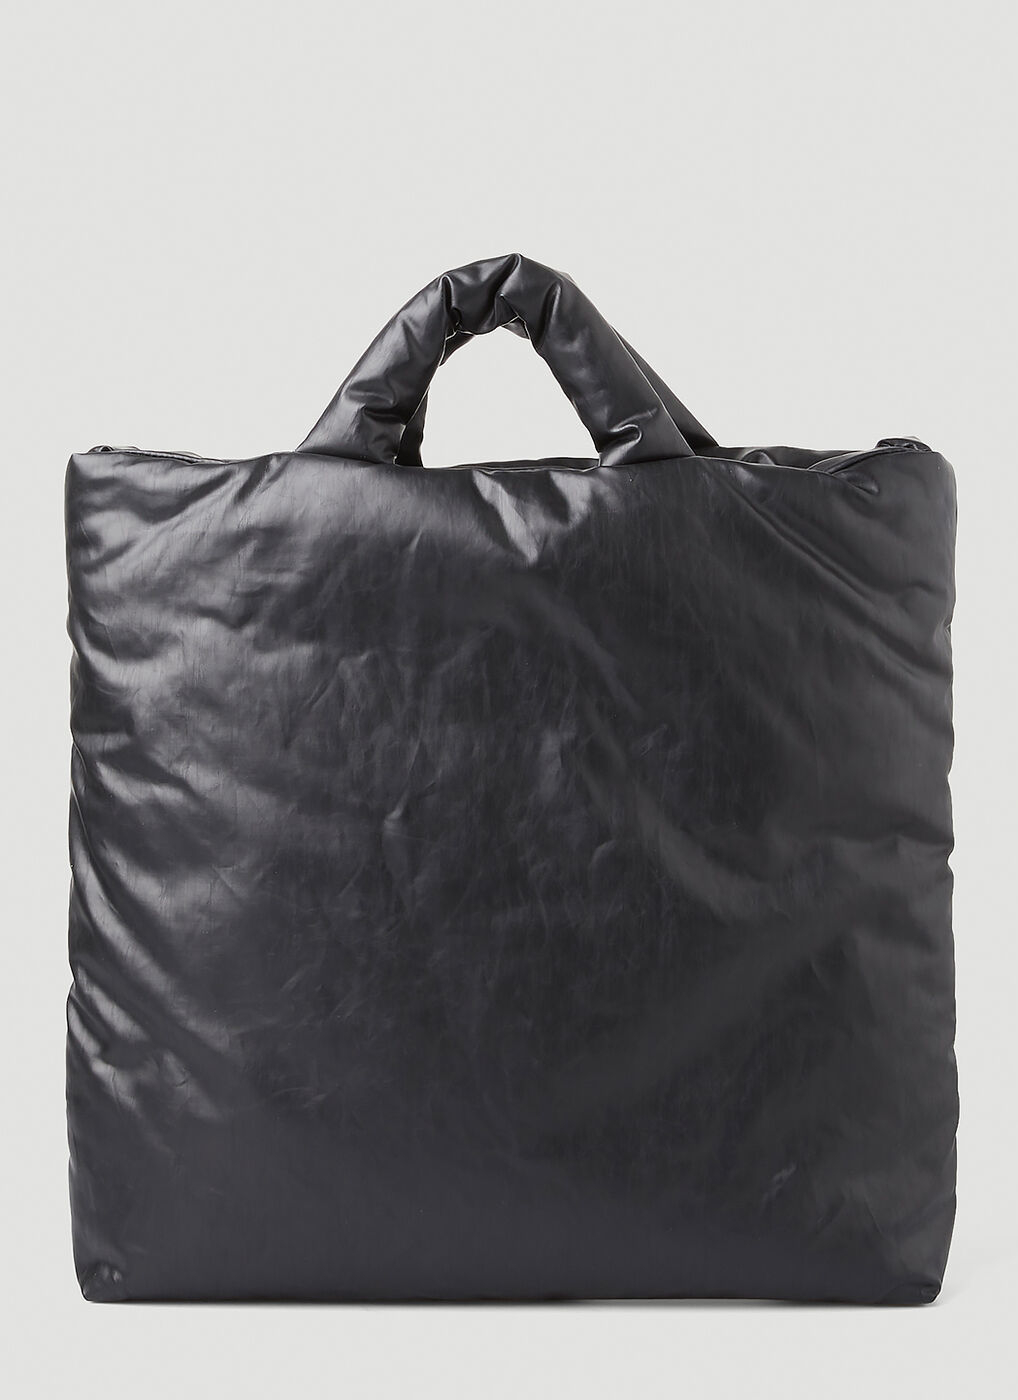 Pillow Oil Medium Tote Bag in Black Kassl Editions